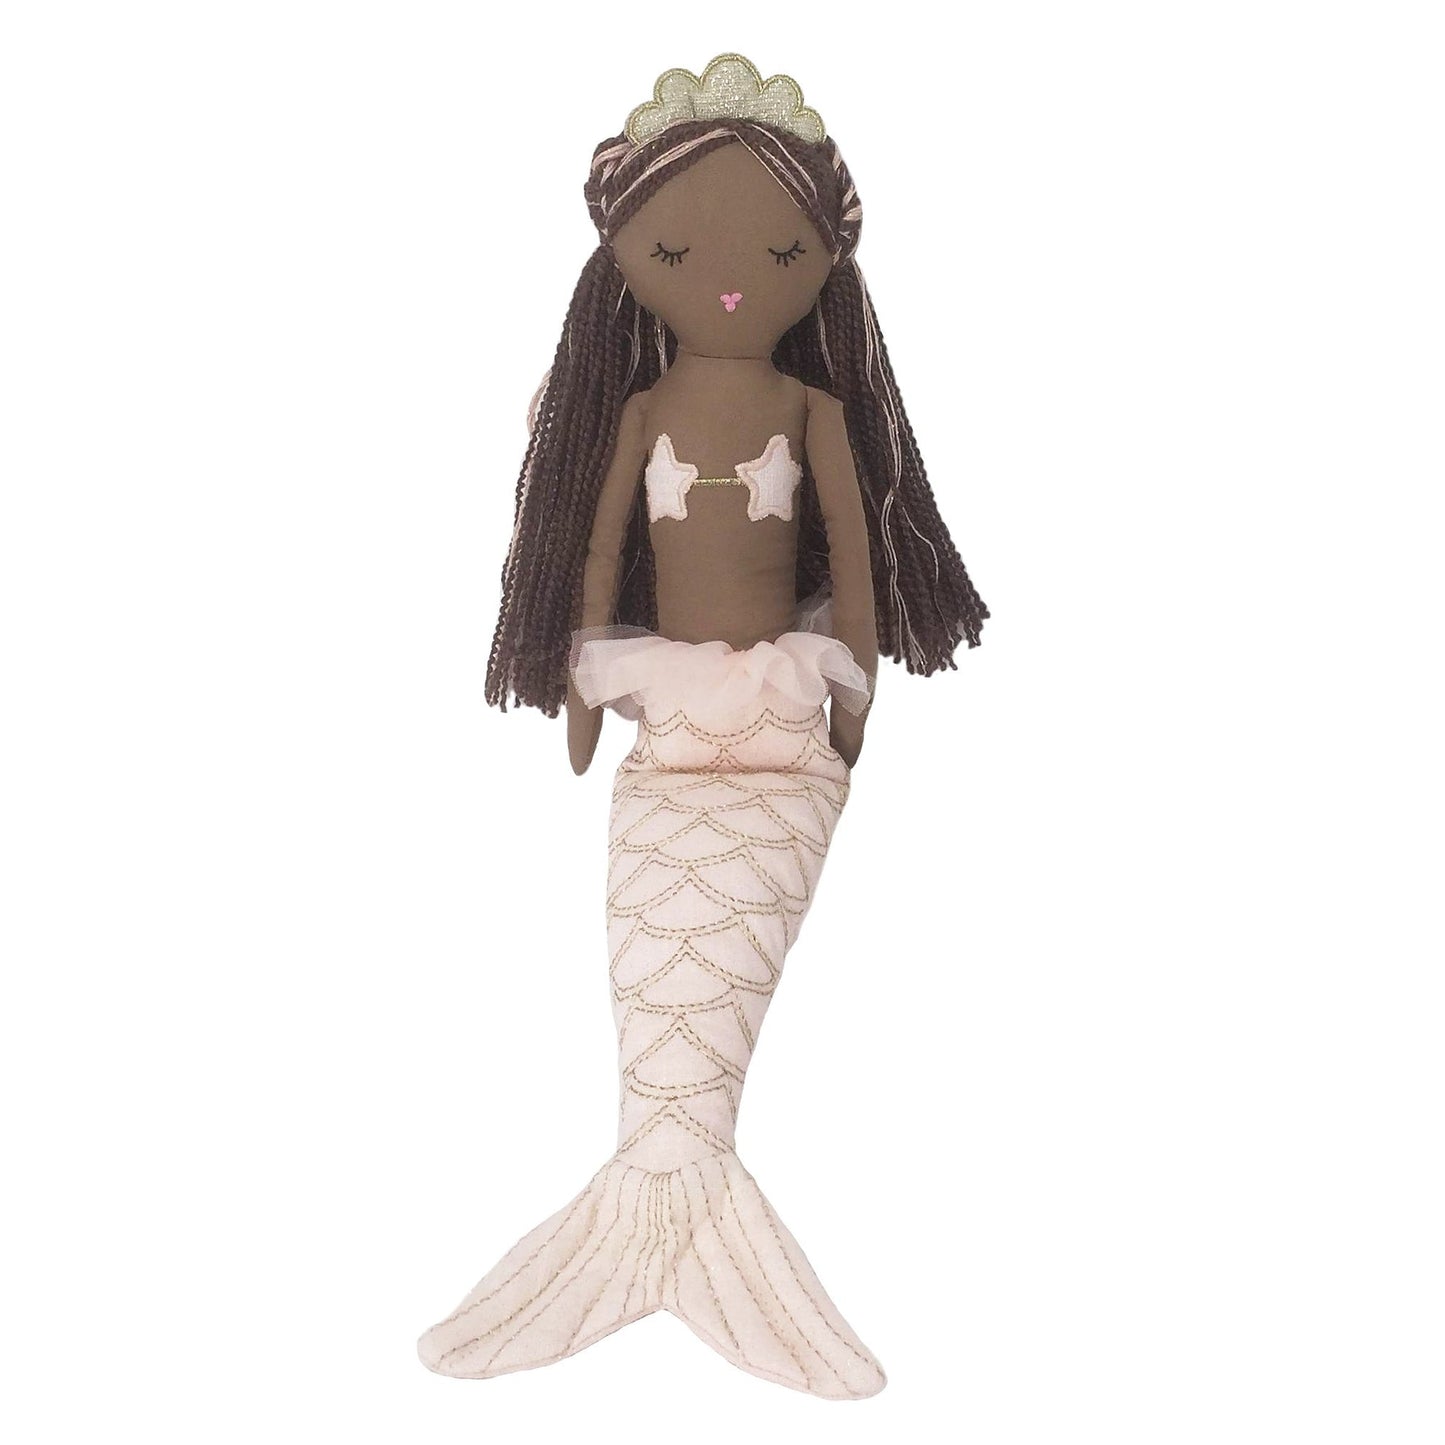 Macie The Mermaid Doll